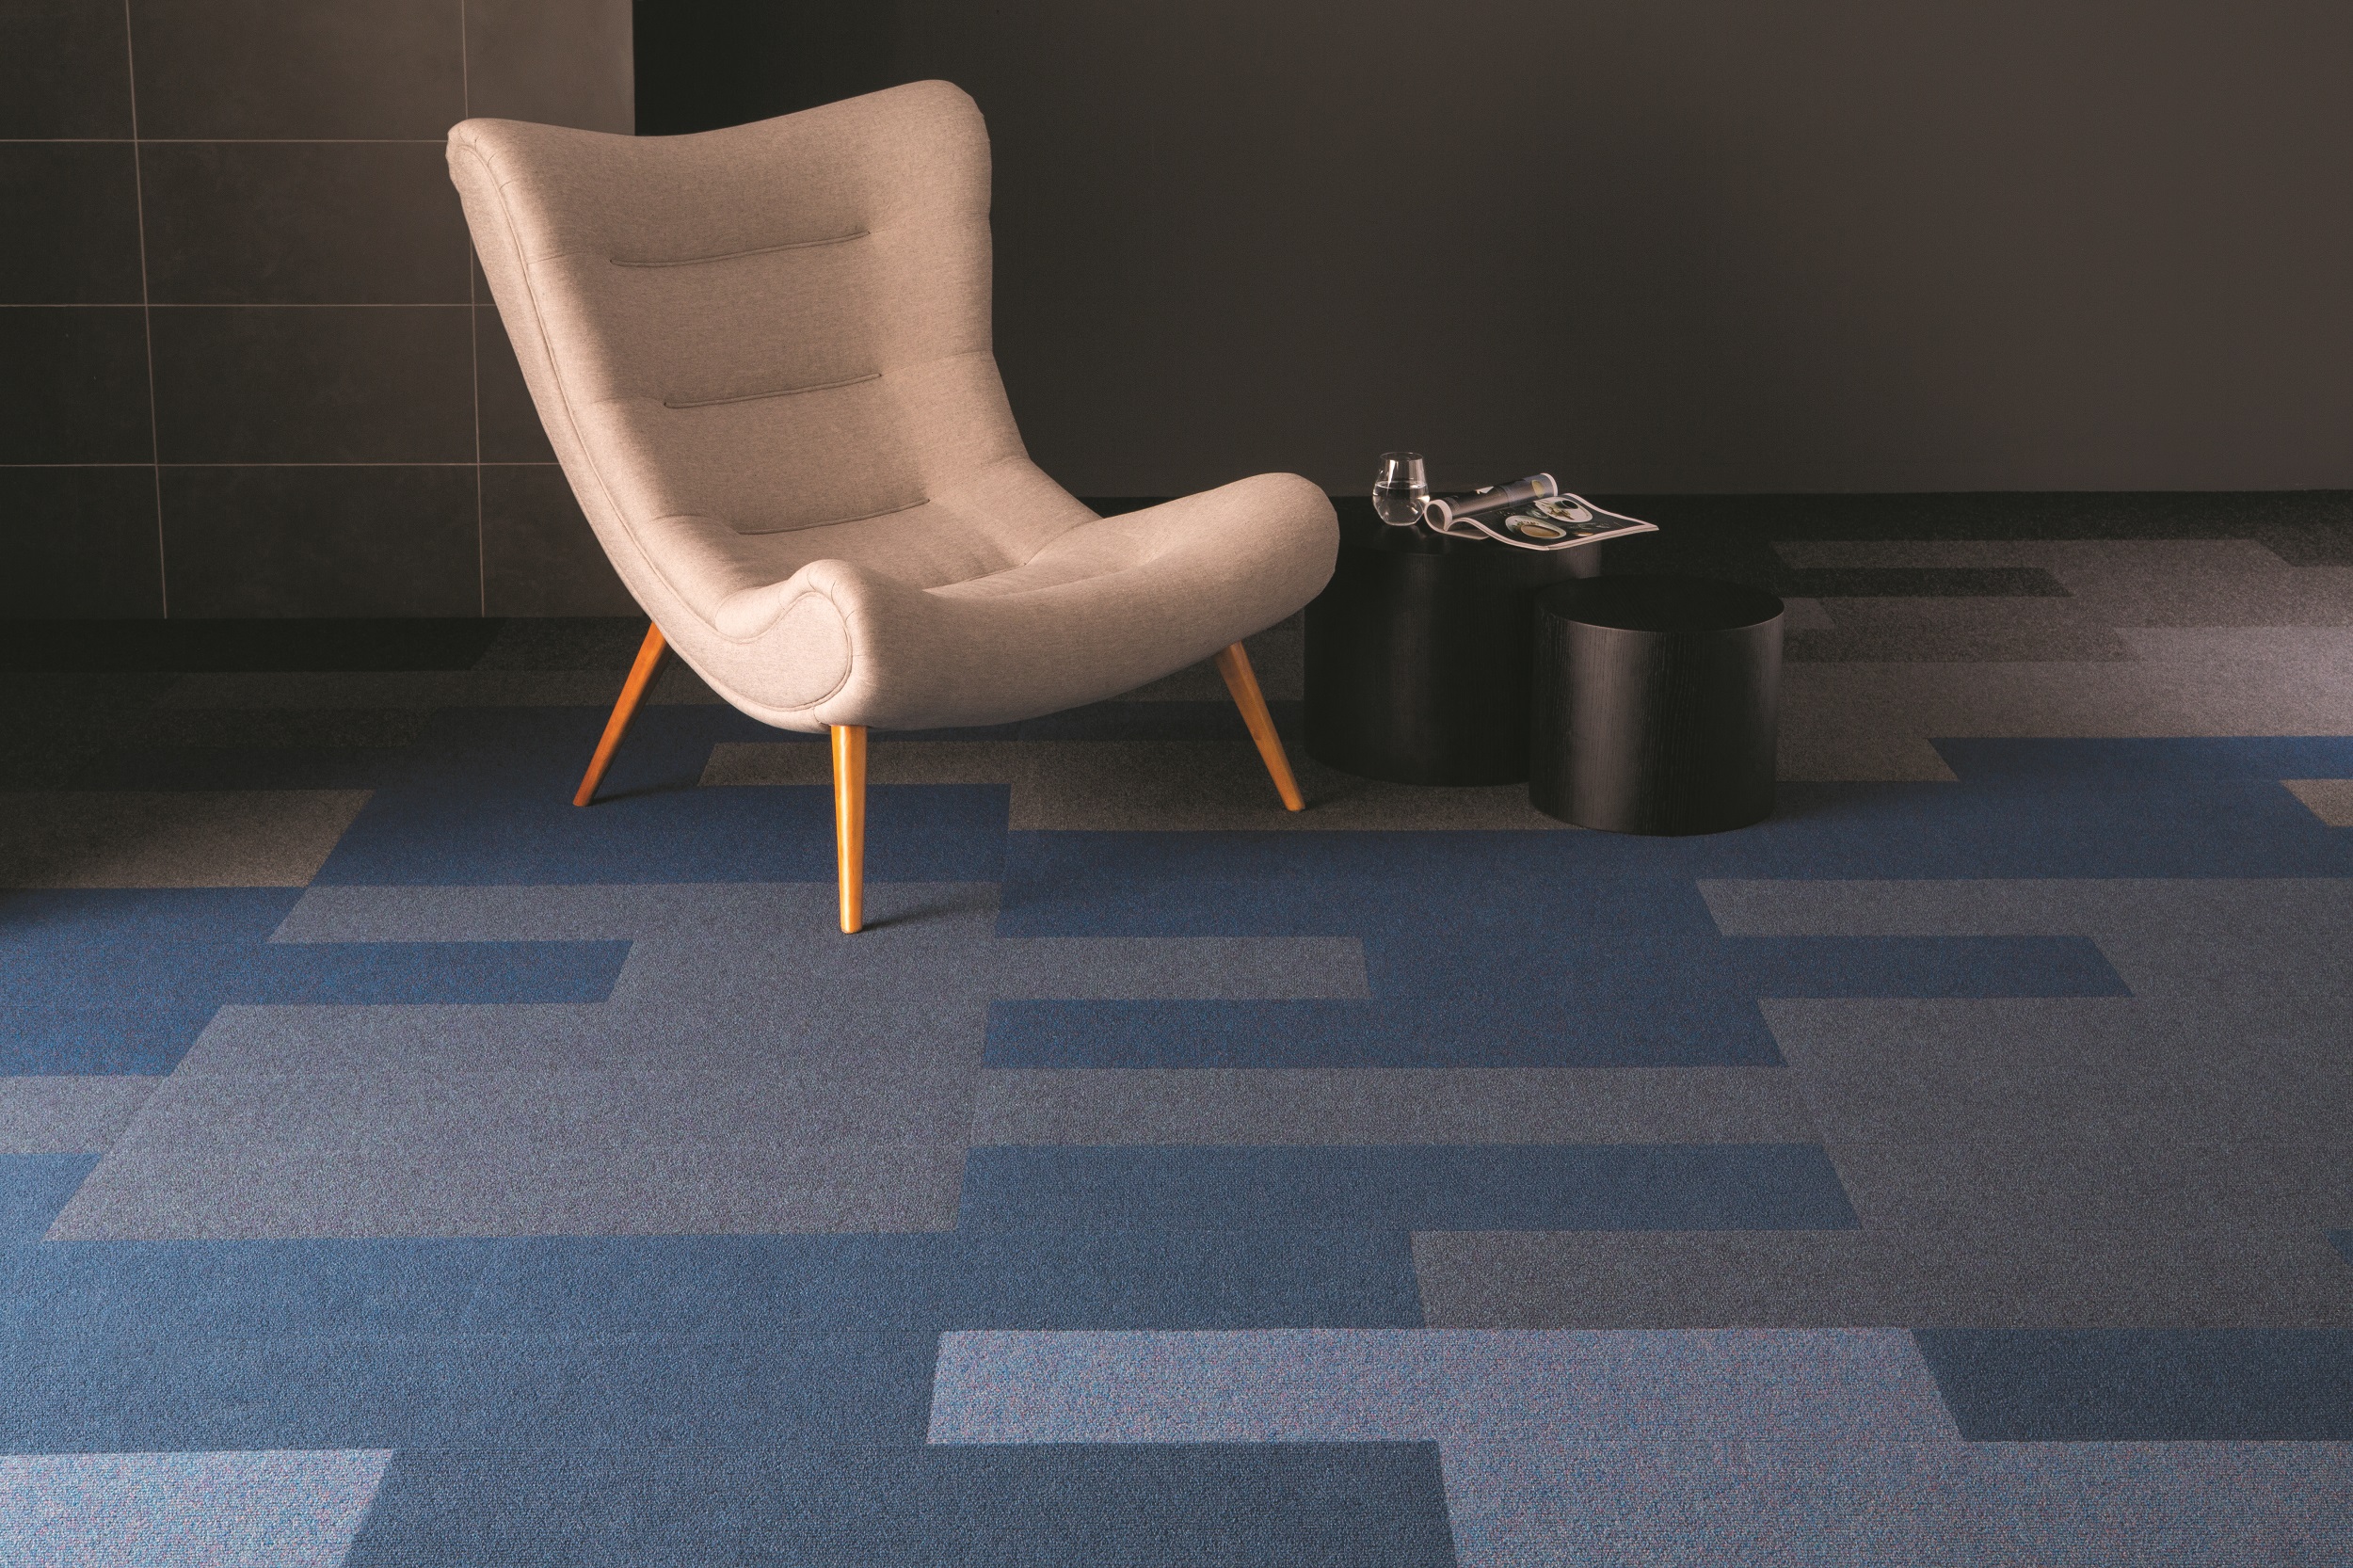 Heckmondwike Broadrib Onyx and Indigo Carpet Tile with chair and table.